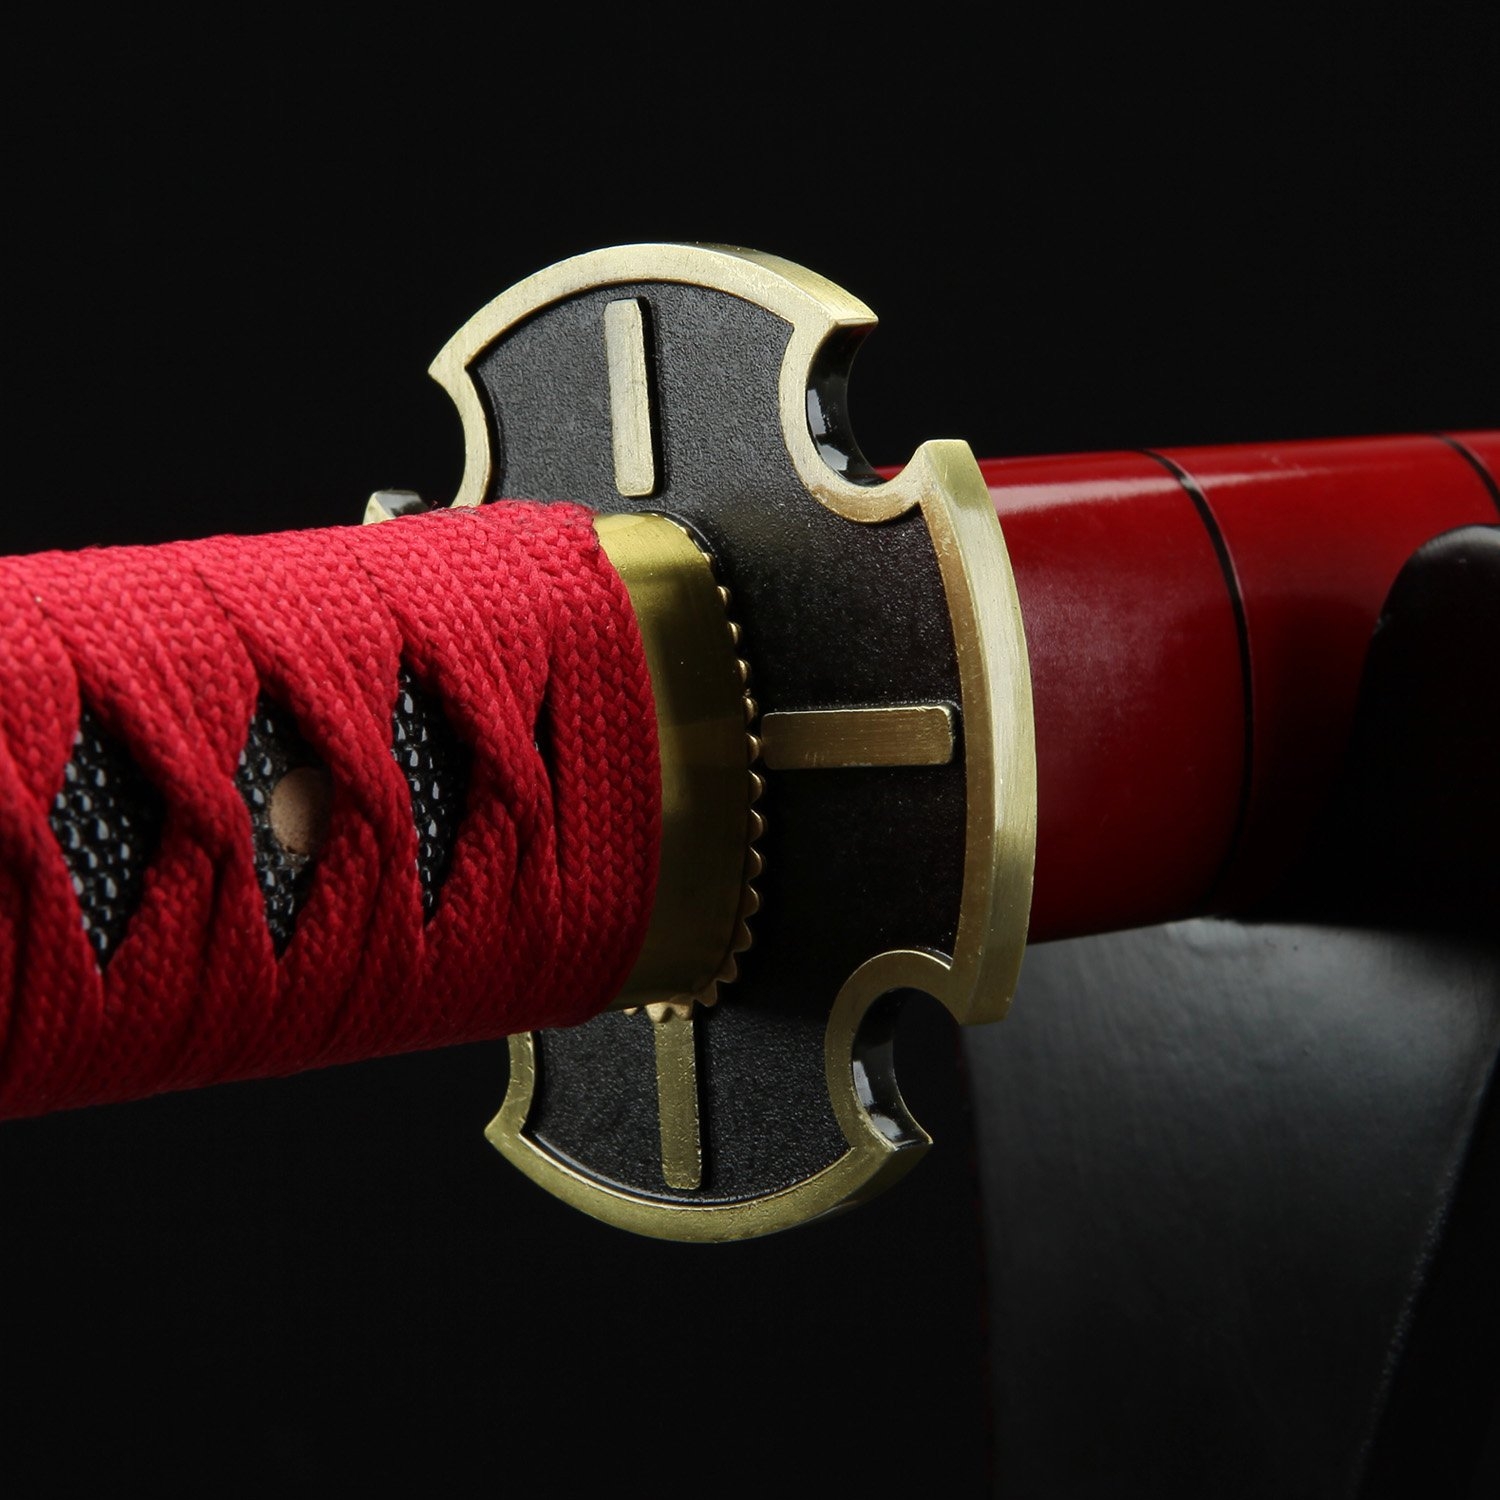 One Piece Swords Roronoa Zoro Enma 1045 Carbon Steel Black Red Blade Real  Japanese Warrior Katanas Handmade Full Tang